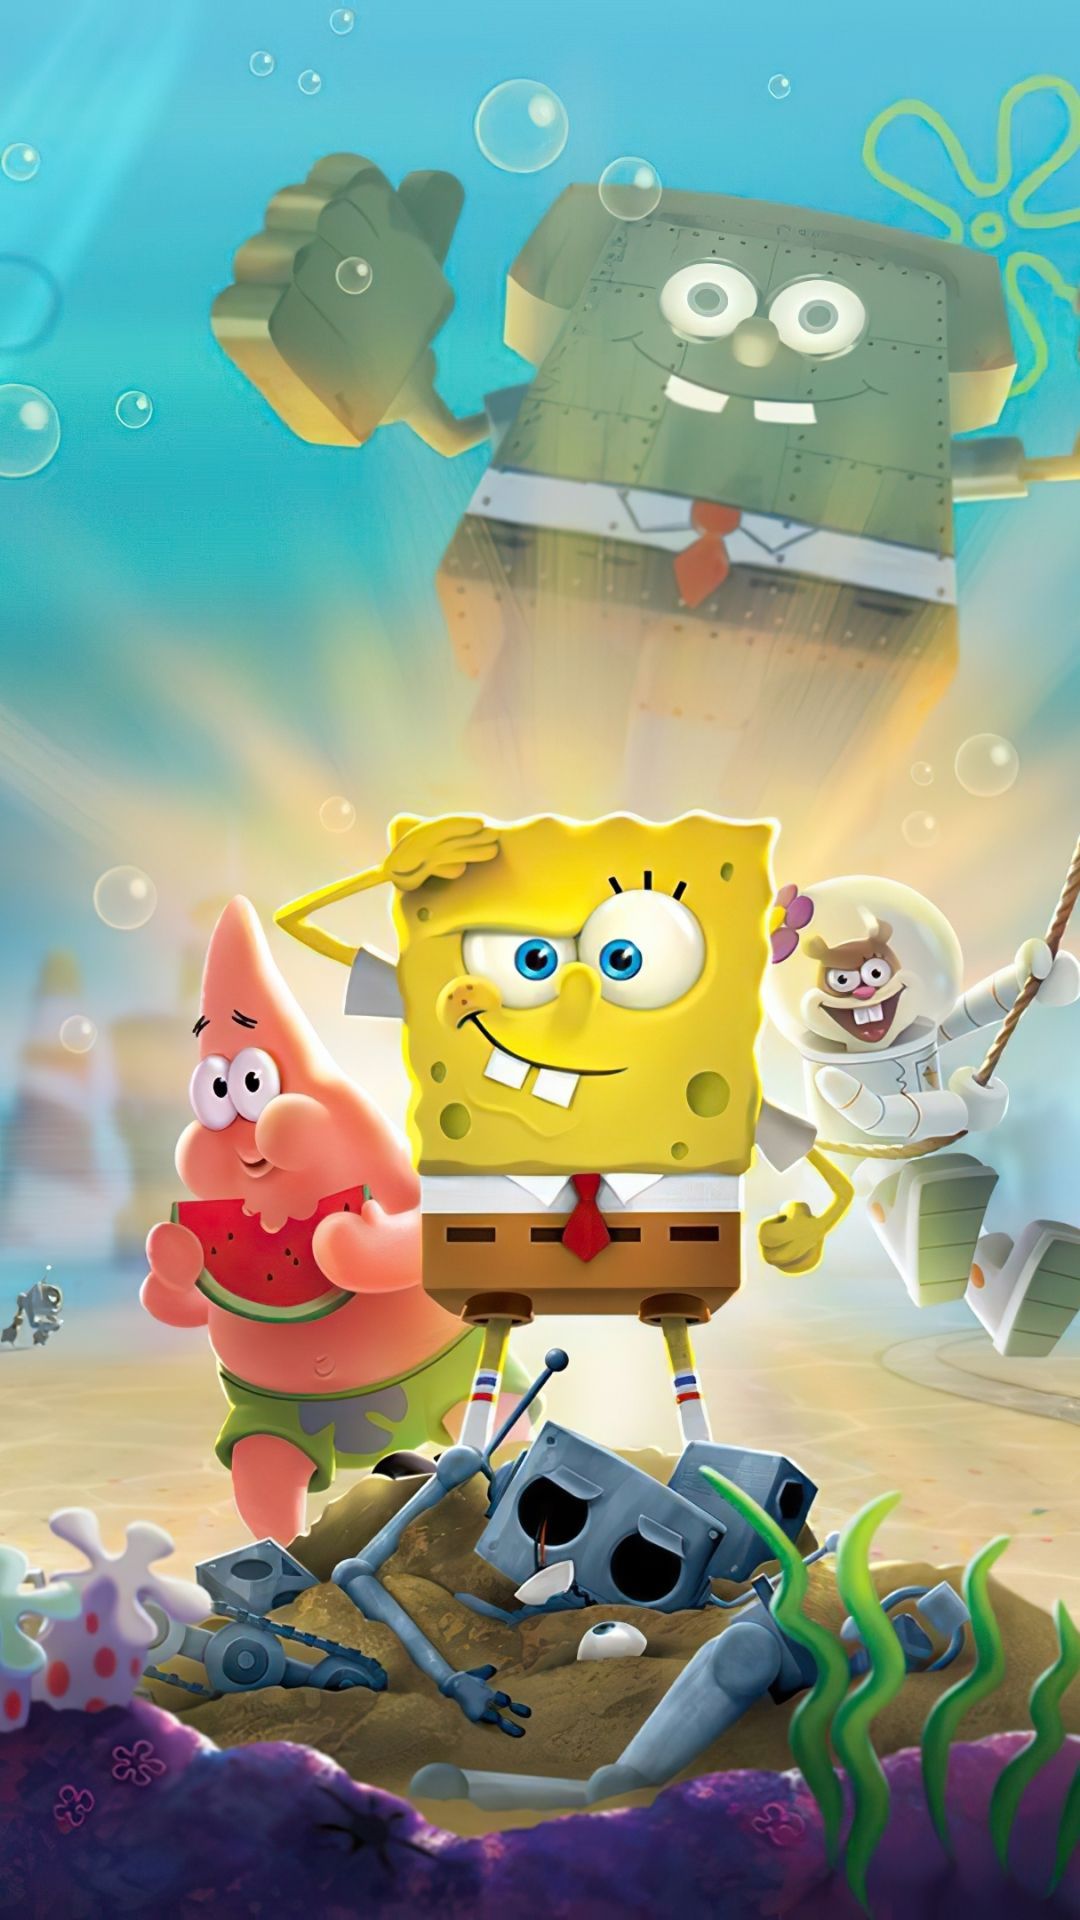 SpongeBob SquarePants, underwater, cartoon wallpaper. Spongebob iphone wallpaper, Cartoon wallpaper, Wallpaper iphone cute